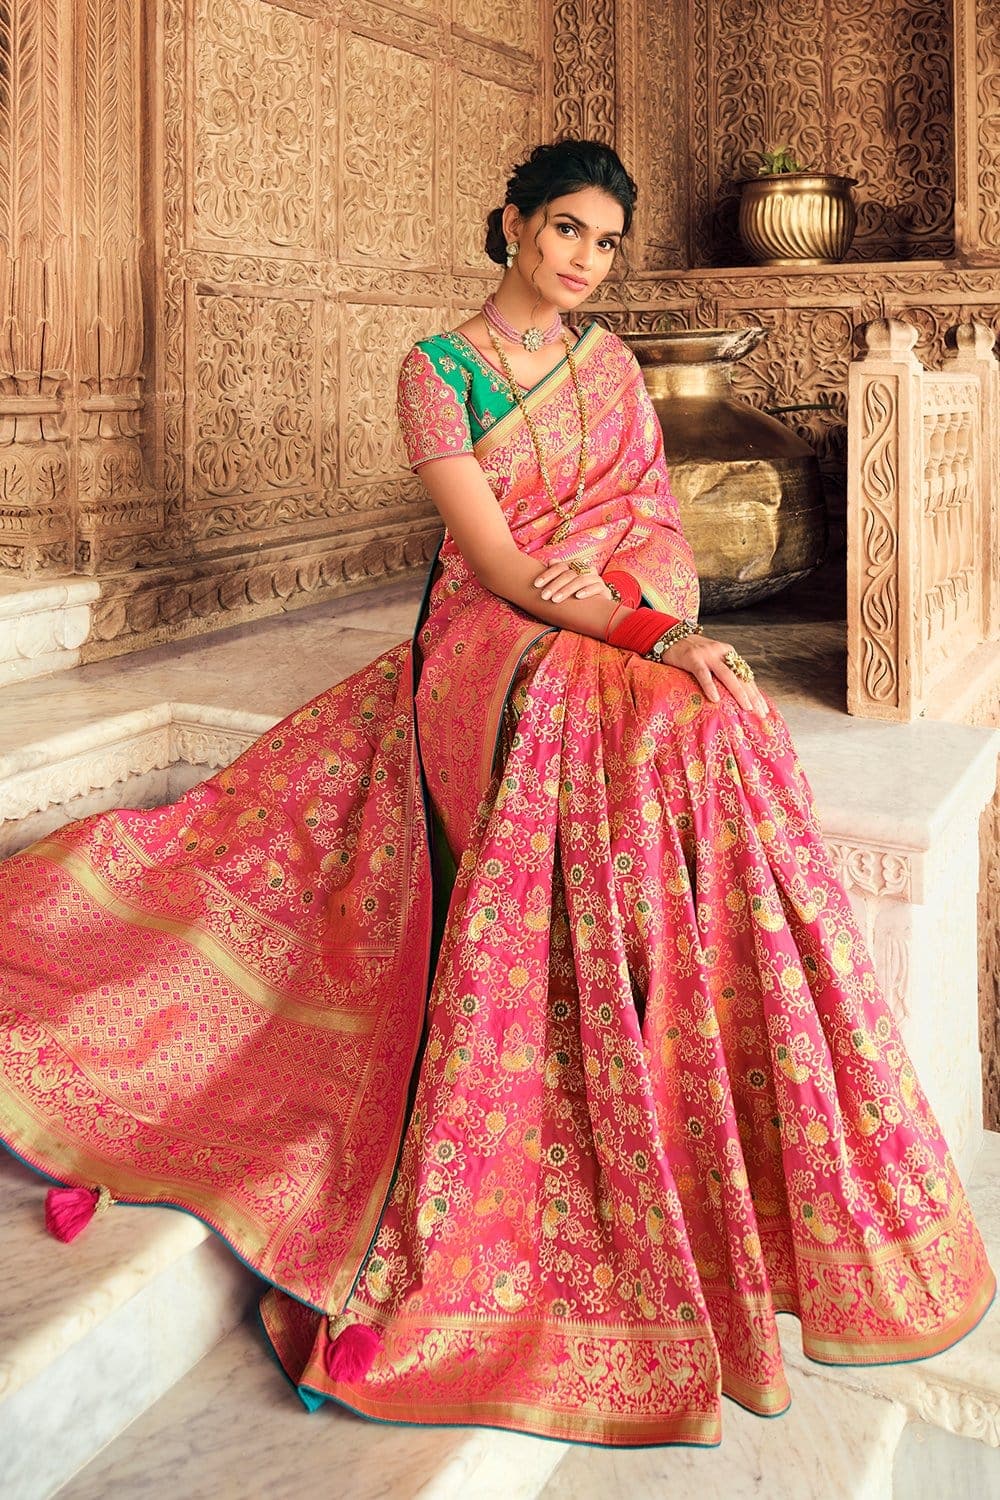 Best Banarasi Saree Designs for Weddings | The Usee Shop Blog